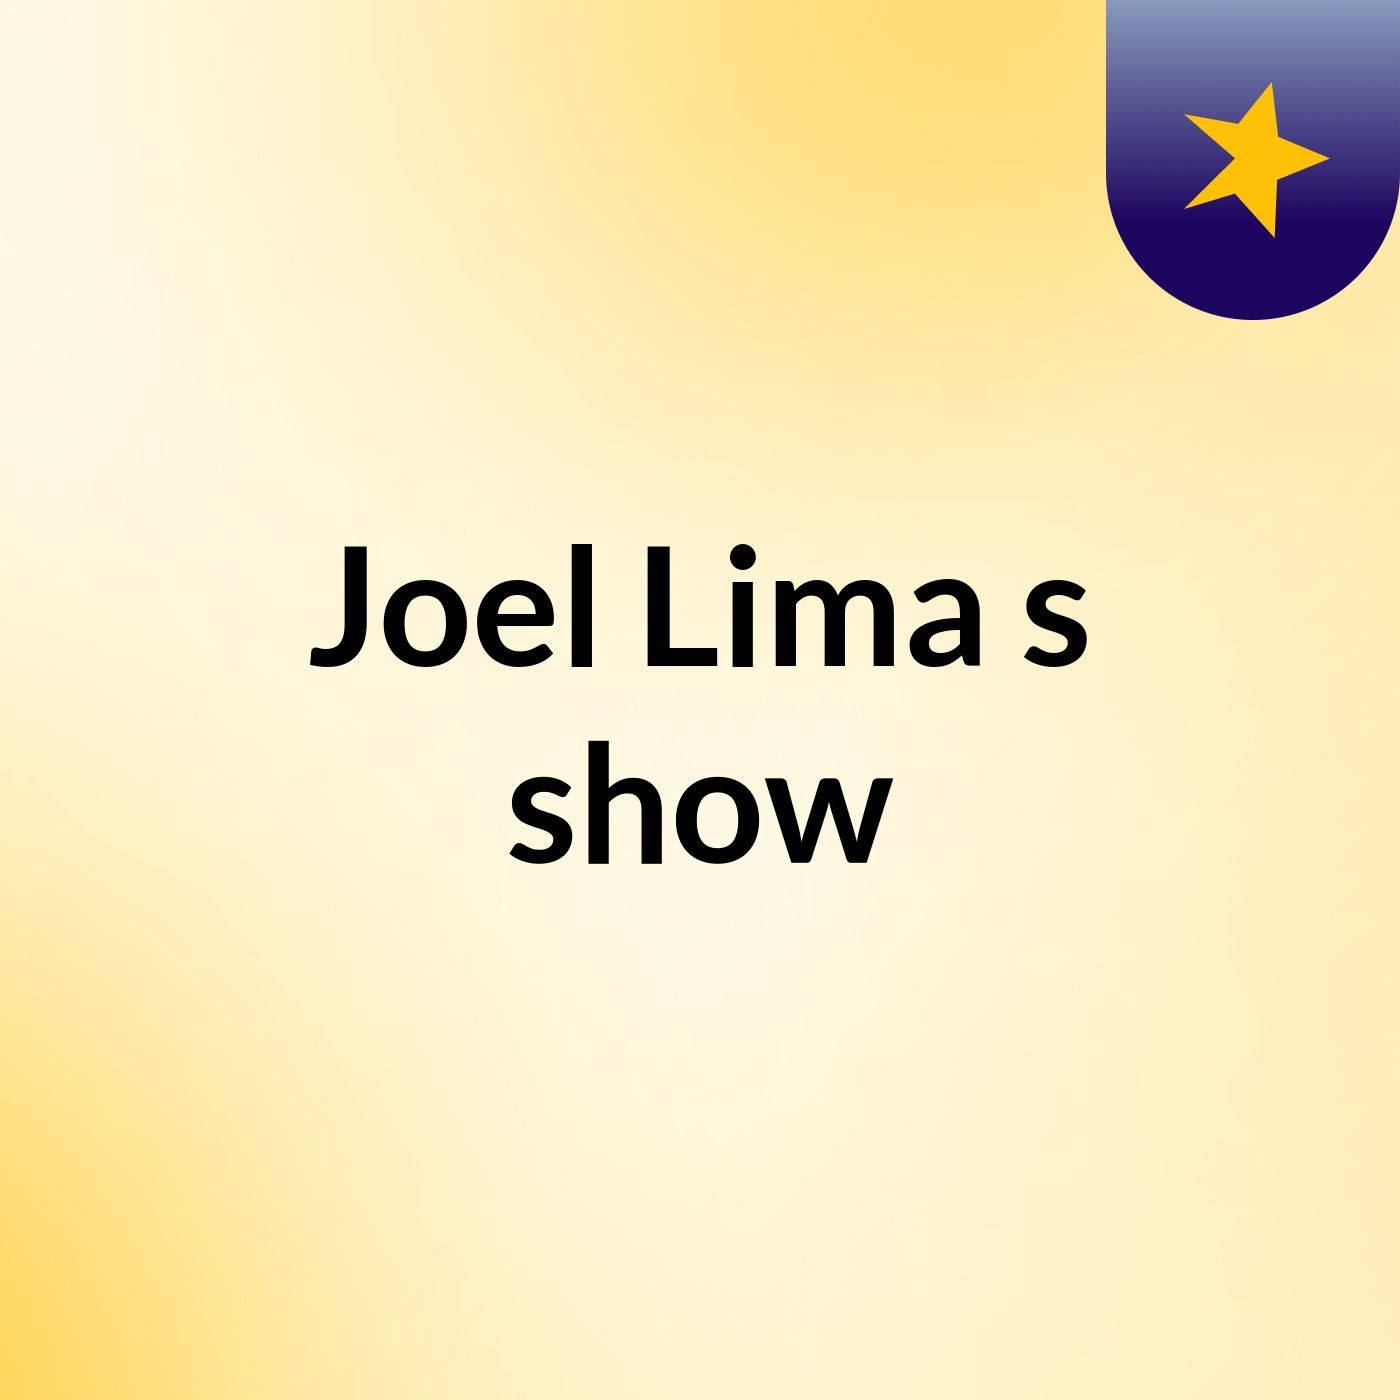 Joel Lima's show